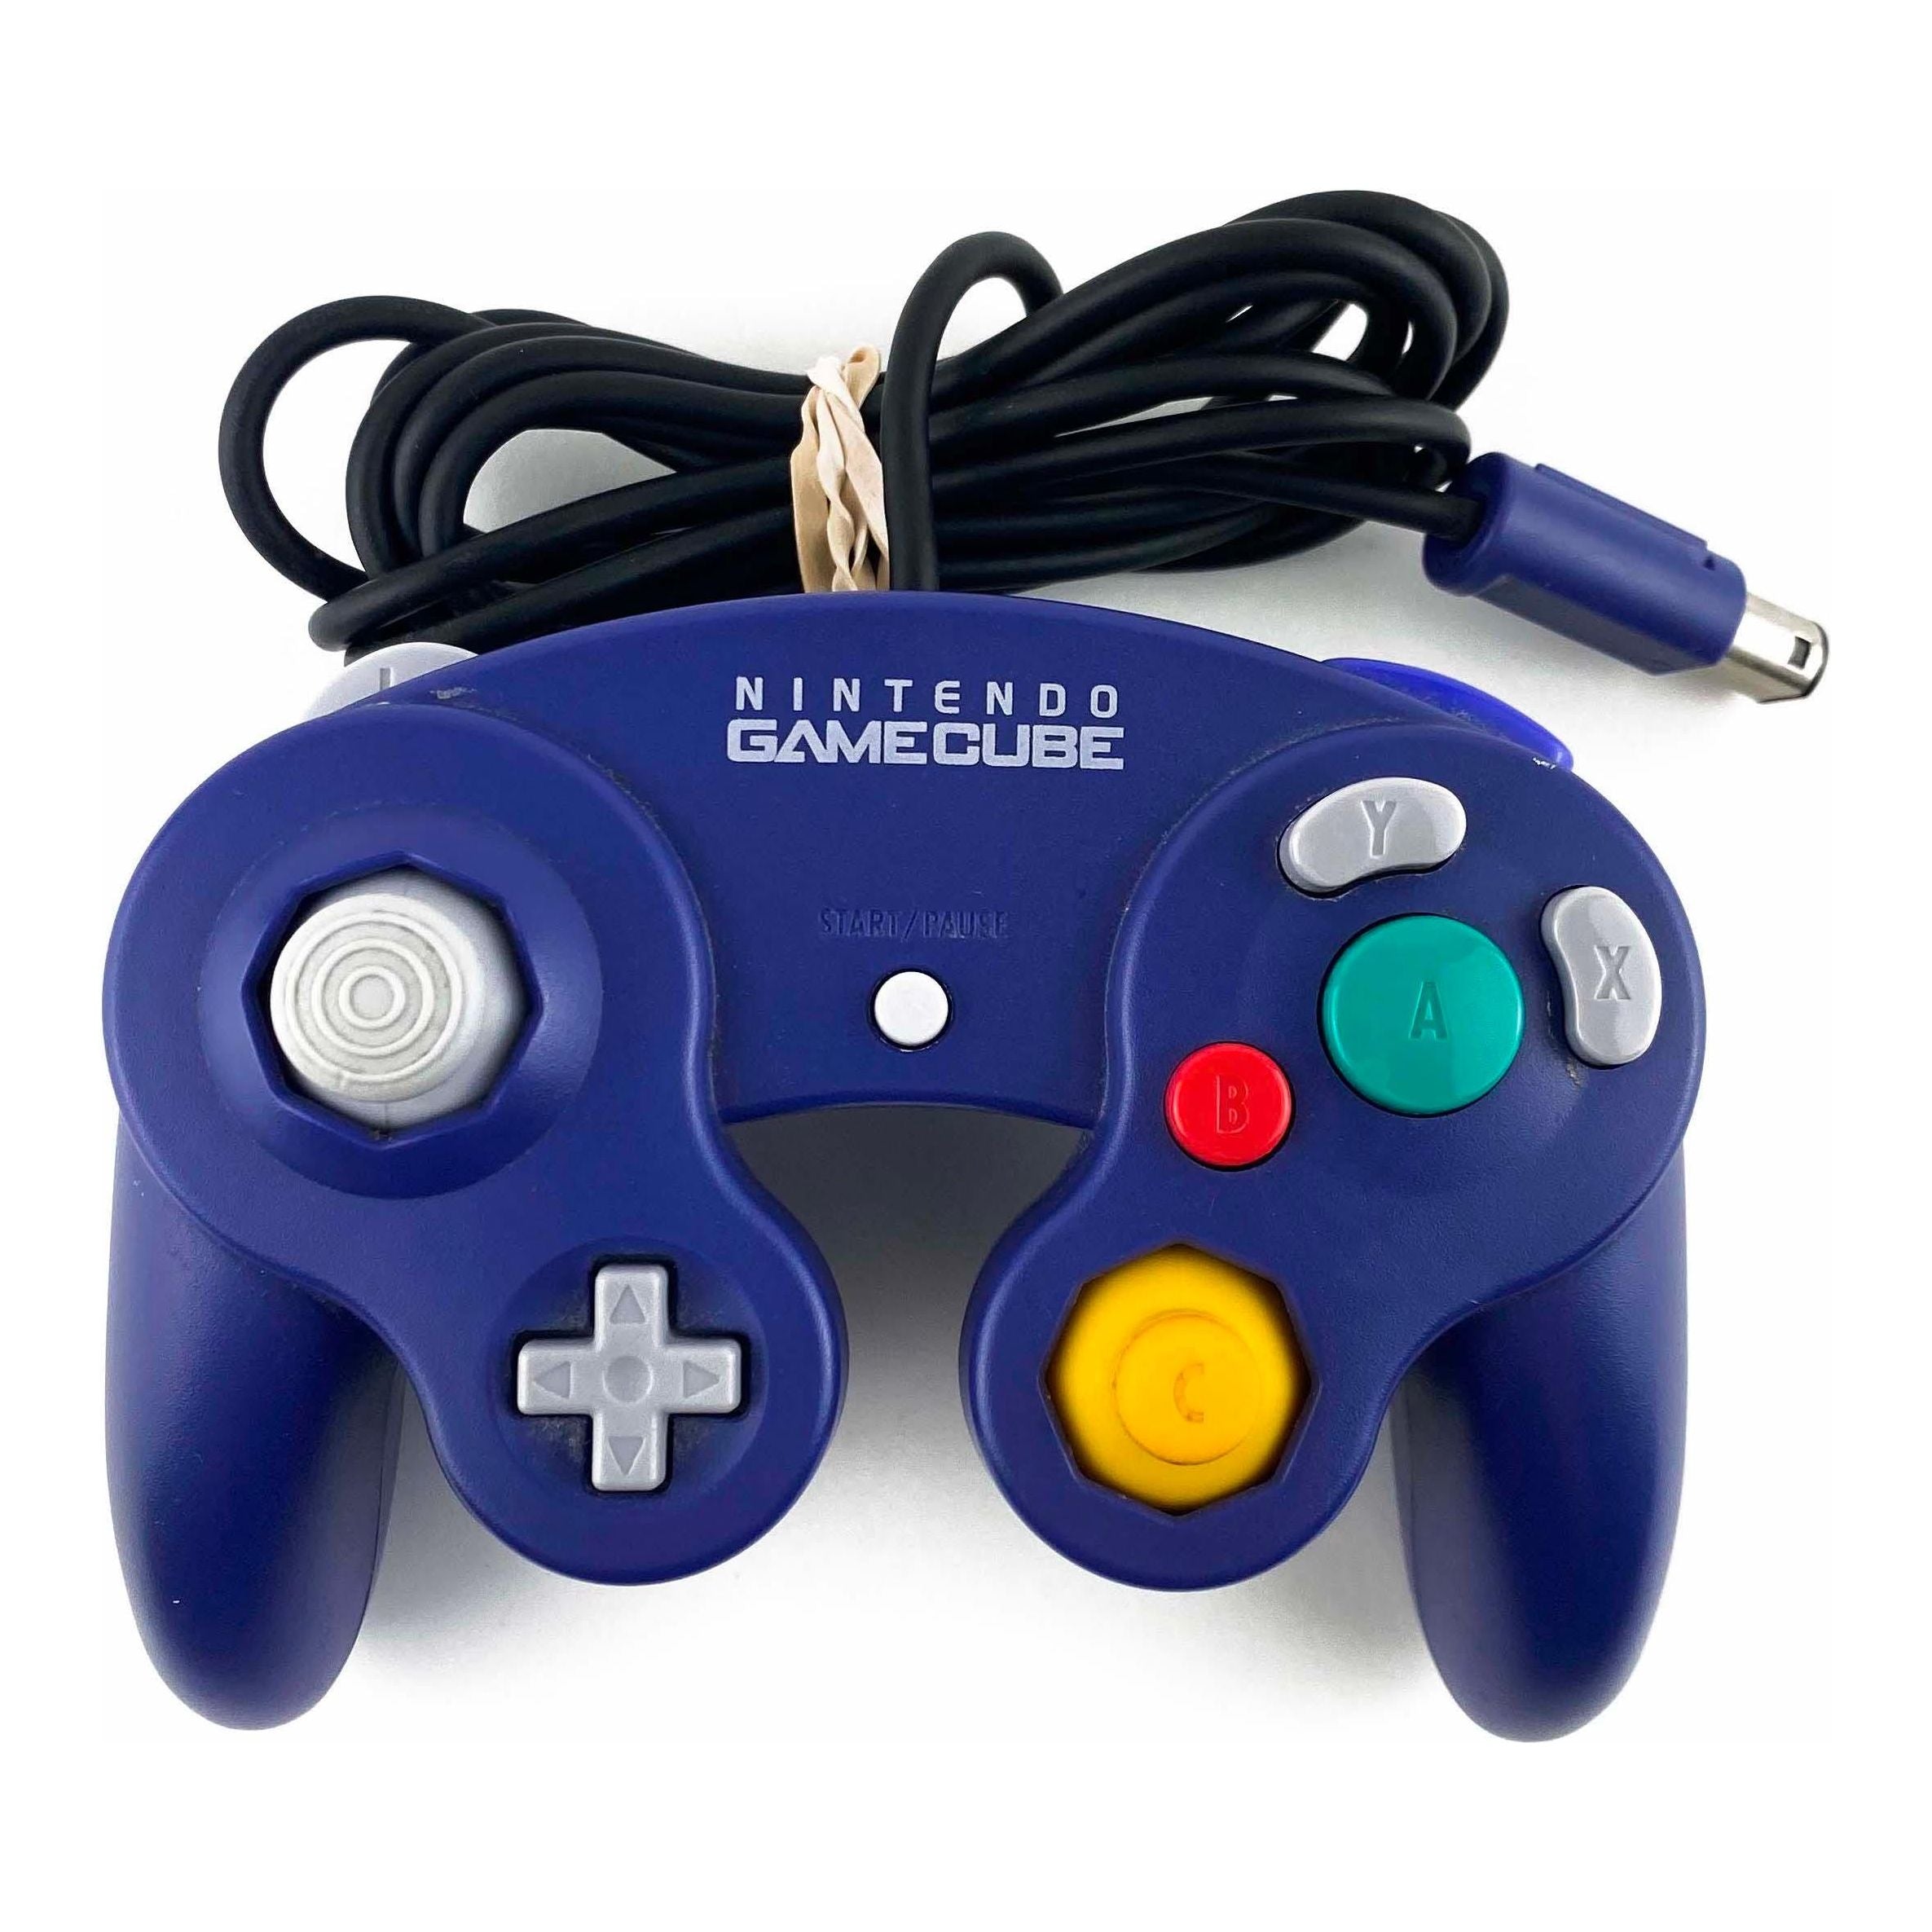 Branded Nintendo Gamecube Controller (Indigo Purple / Used)